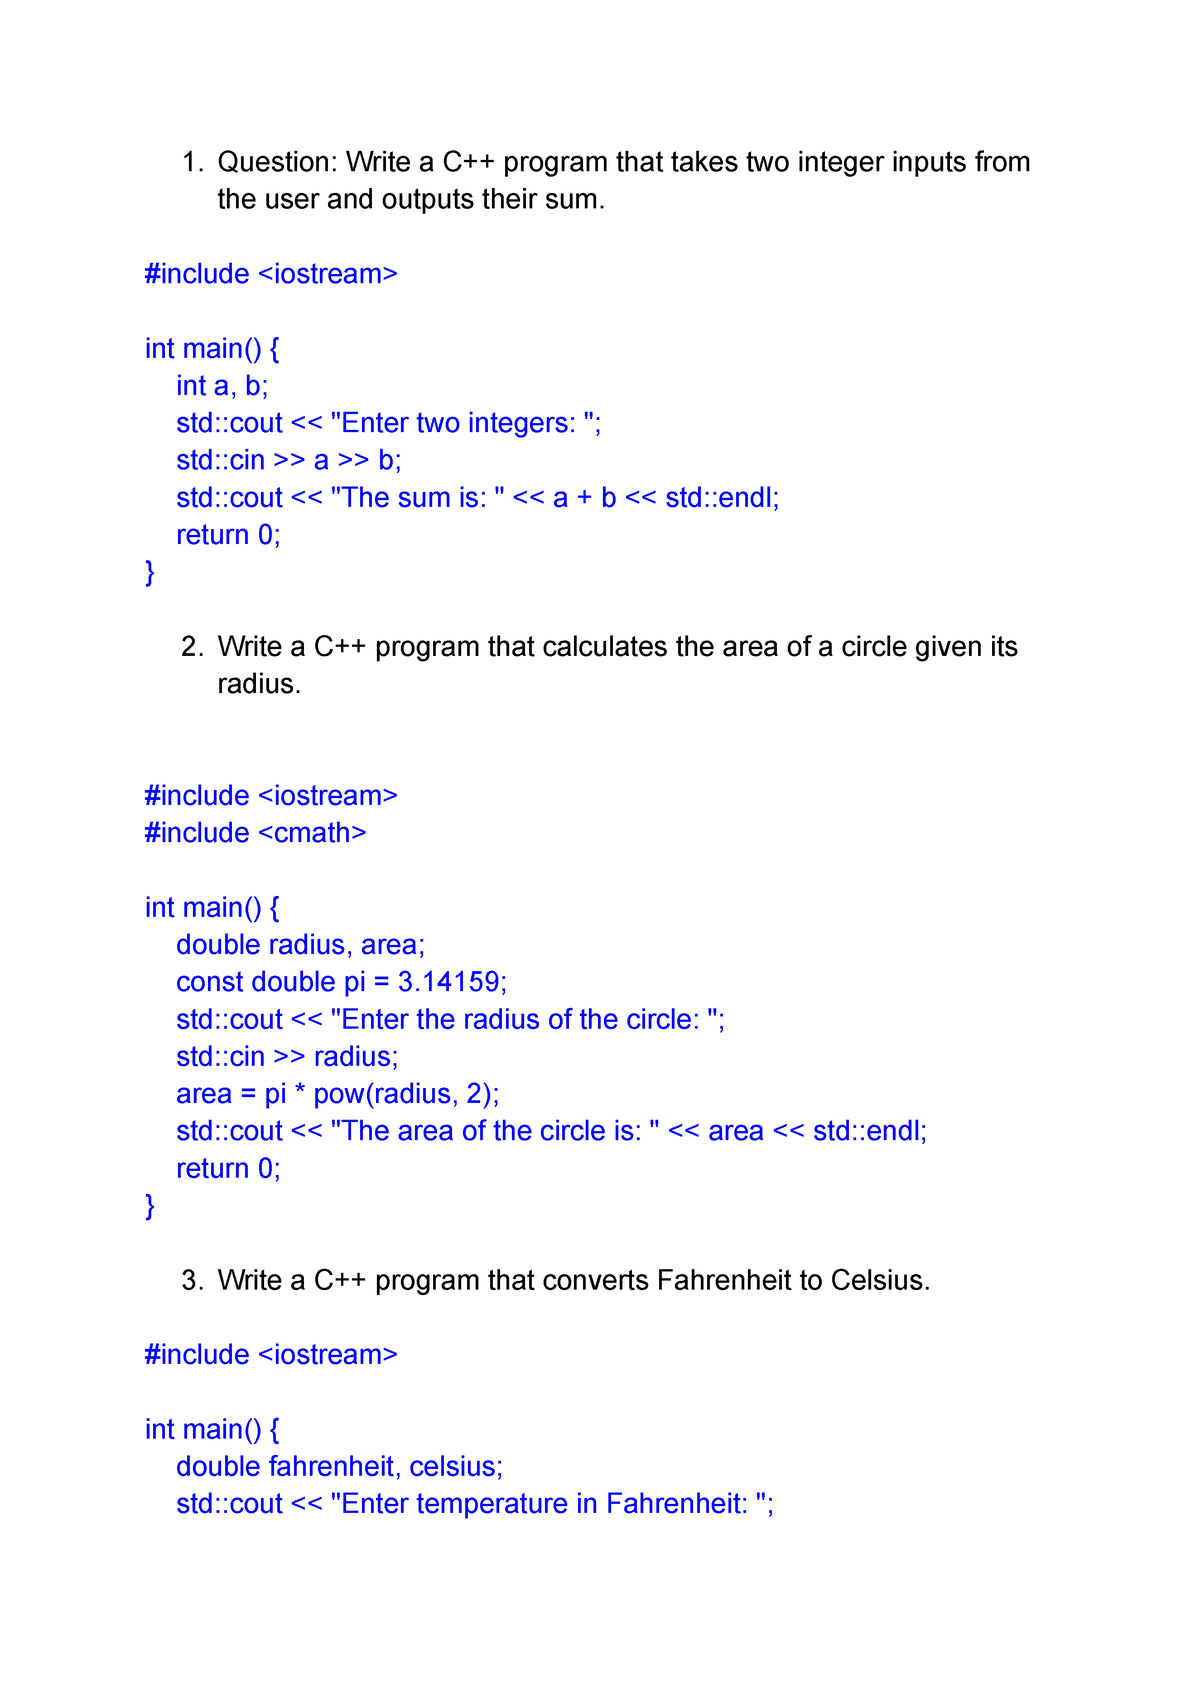 Writing C++ programs problems - Question: Write a C++ program that ...